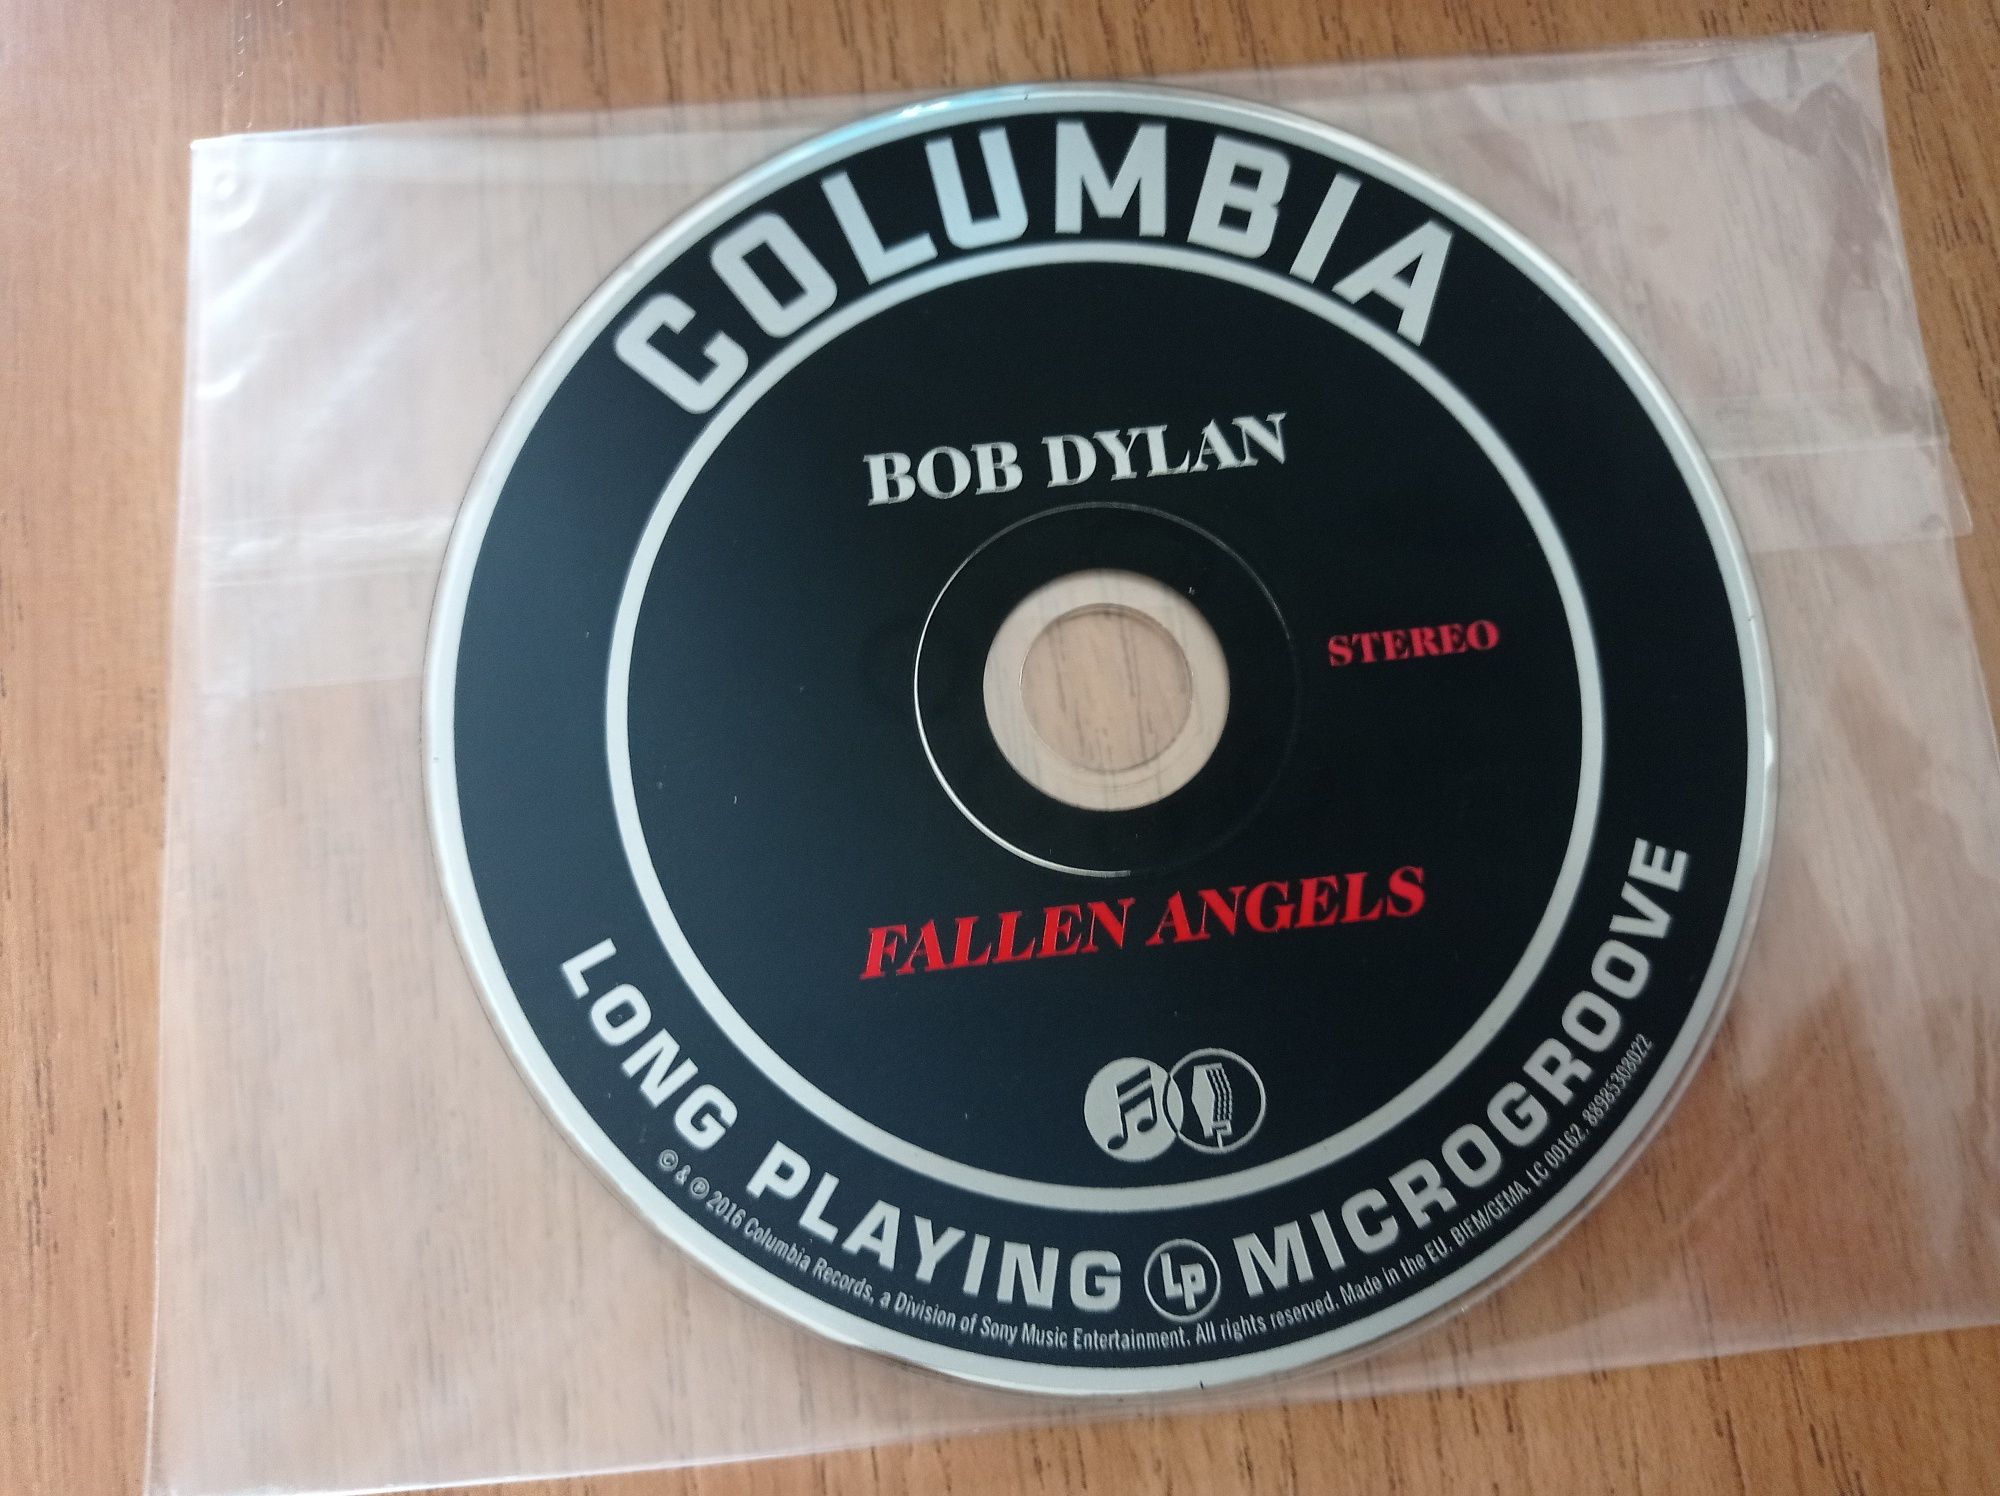 Bob Dylan - Fallen angels